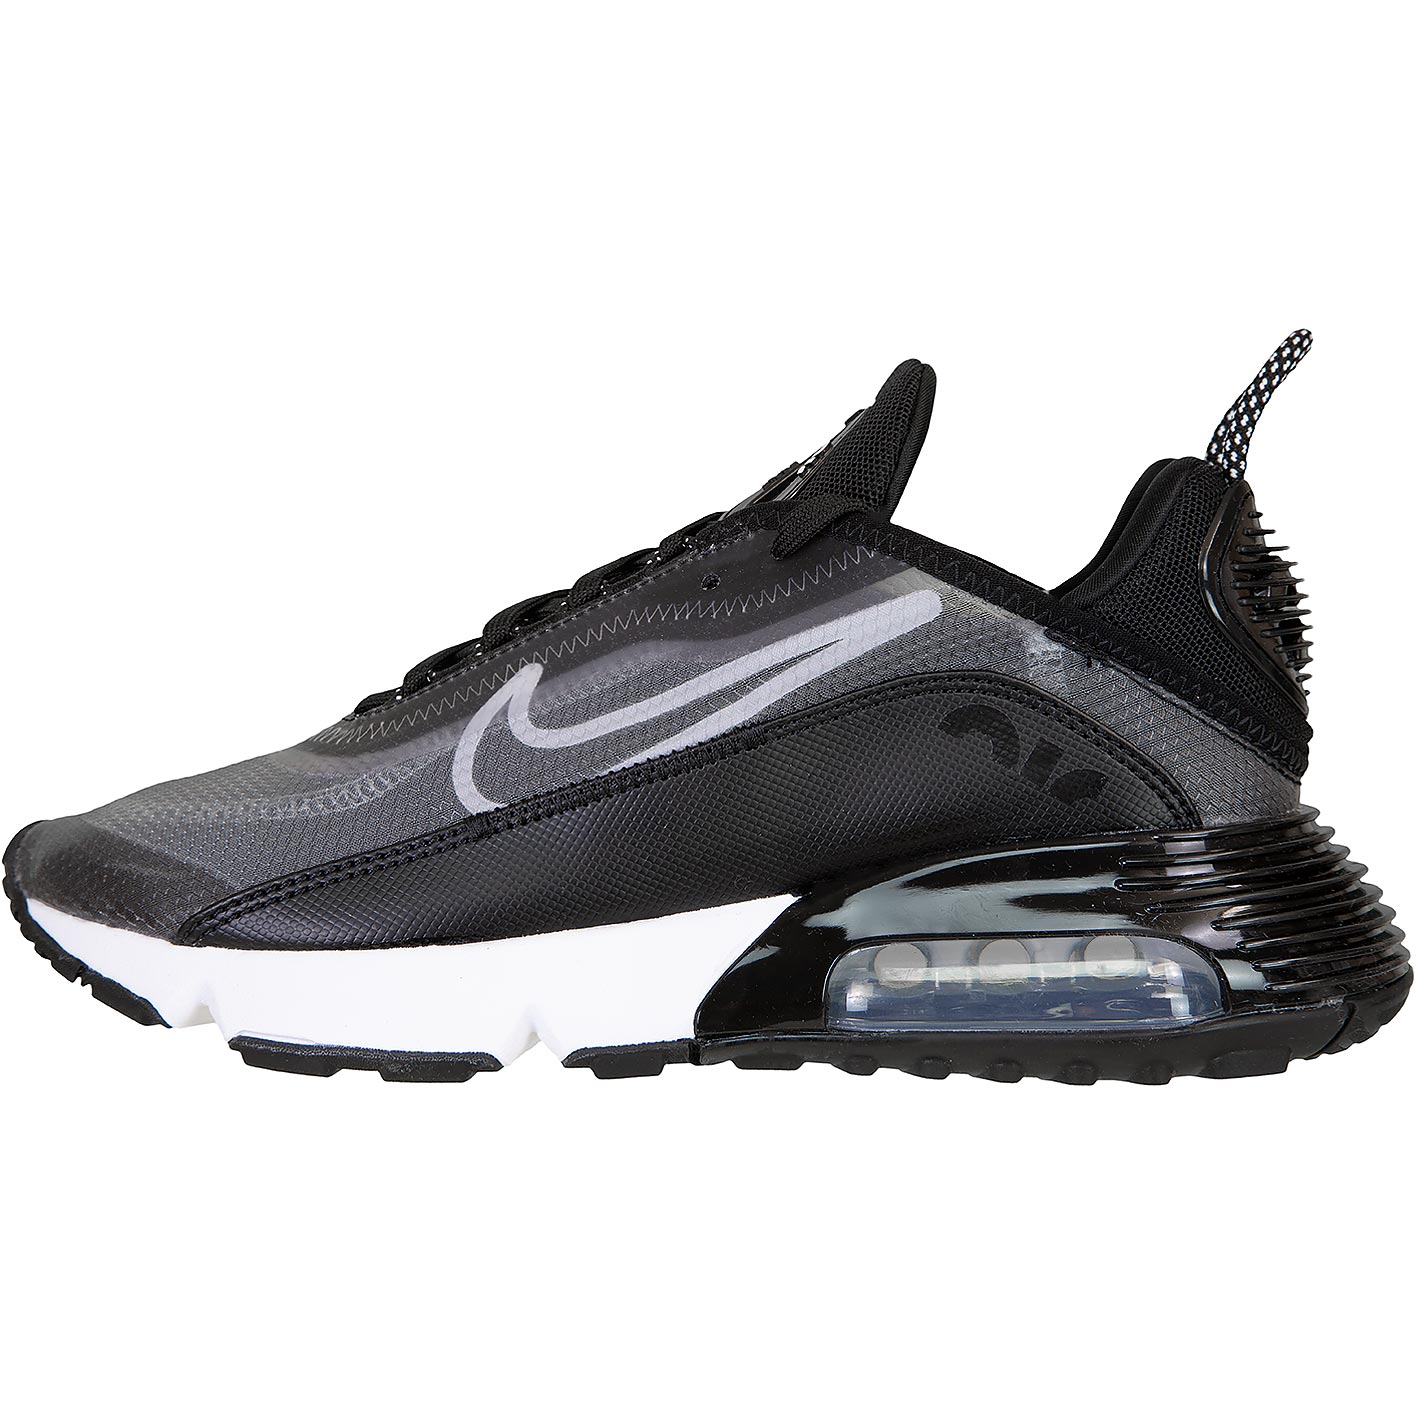 ☆ Nike Air Max 2090 Damen Sneaker schwarz/silber - hier bestellen!